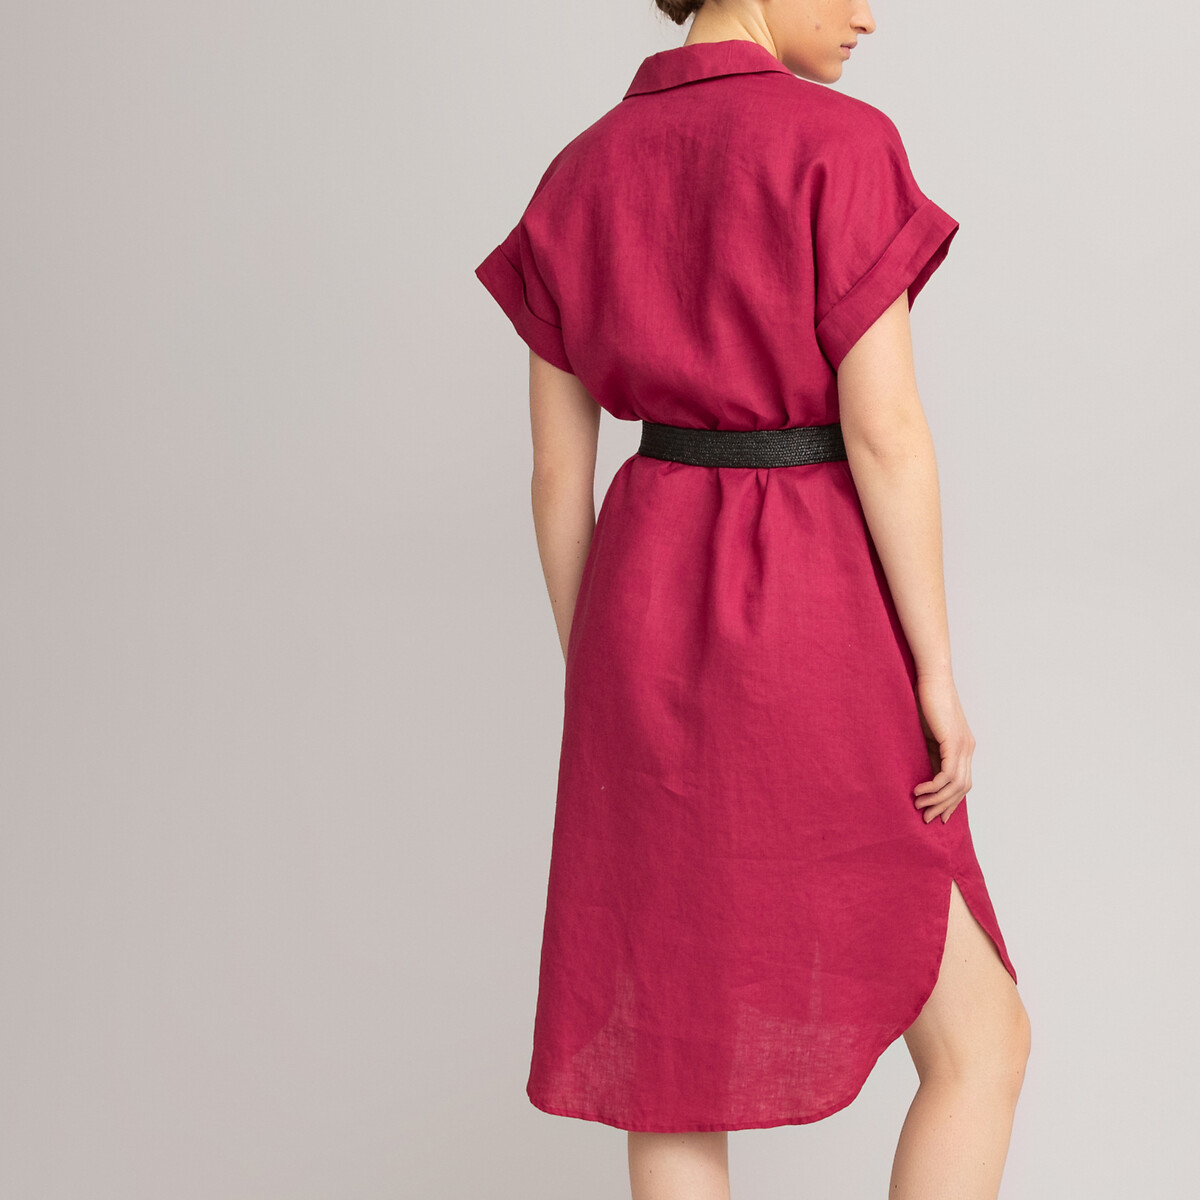 Платье-рубашка LaRedoute С короткими рукавами из льна 46 (FR) - 52 (RUS) розовый, размер 46 (FR) - 52 (RUS) С короткими рукавами из льна 46 (FR) - 52 (RUS) розовый - фото 4